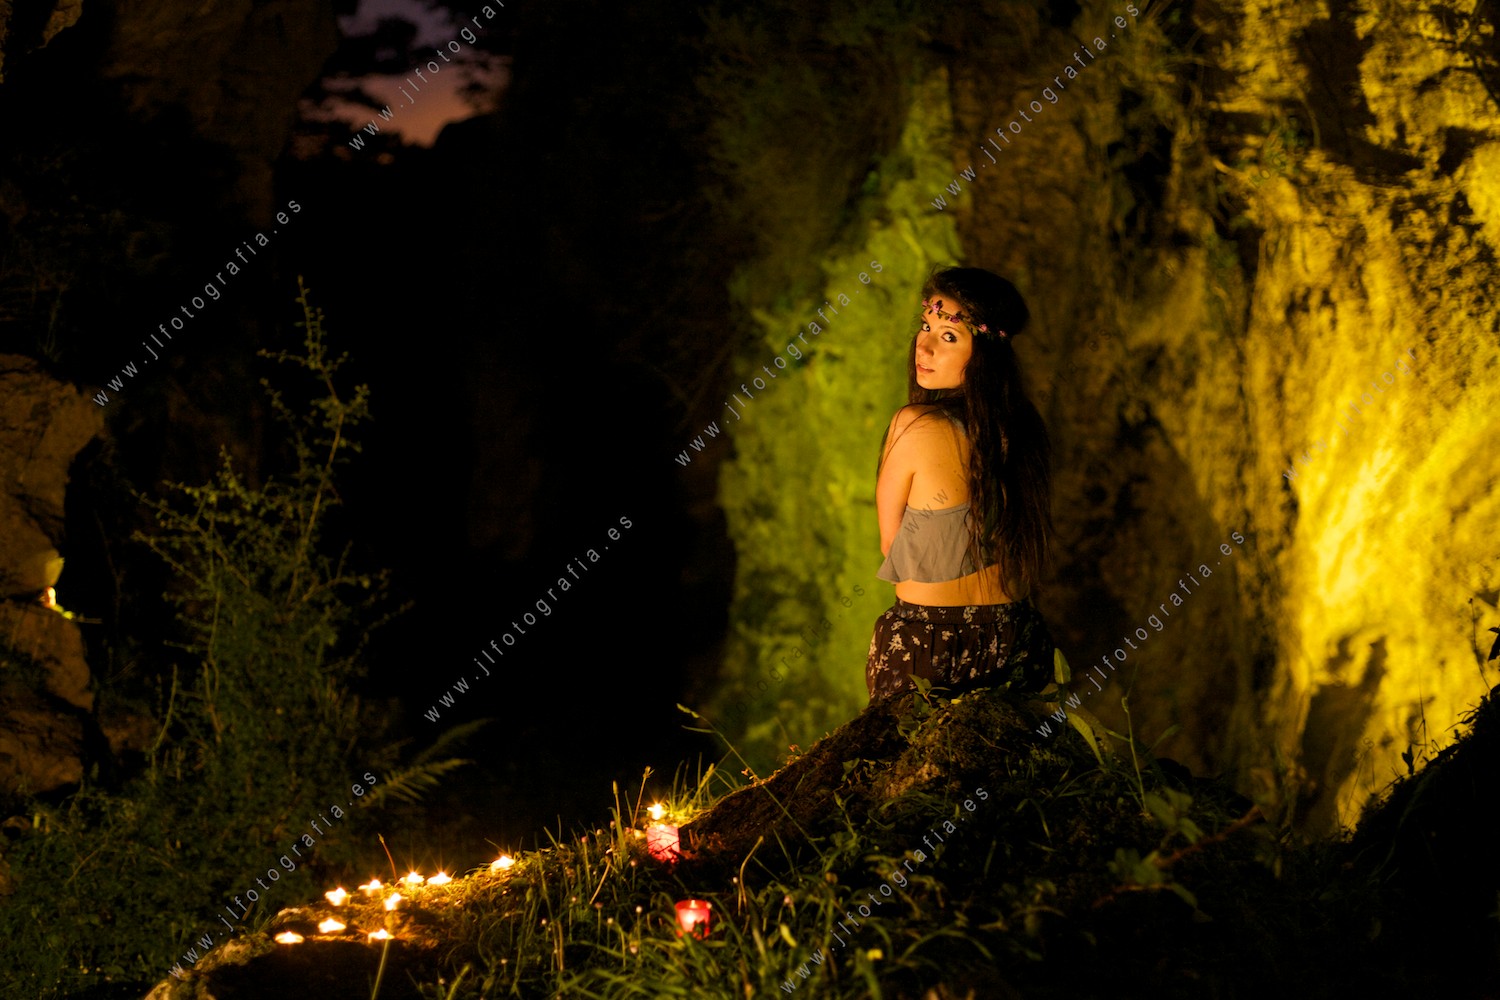 Janire, modelo, posando en el taller de iluminación de Denbora en peñas negras.